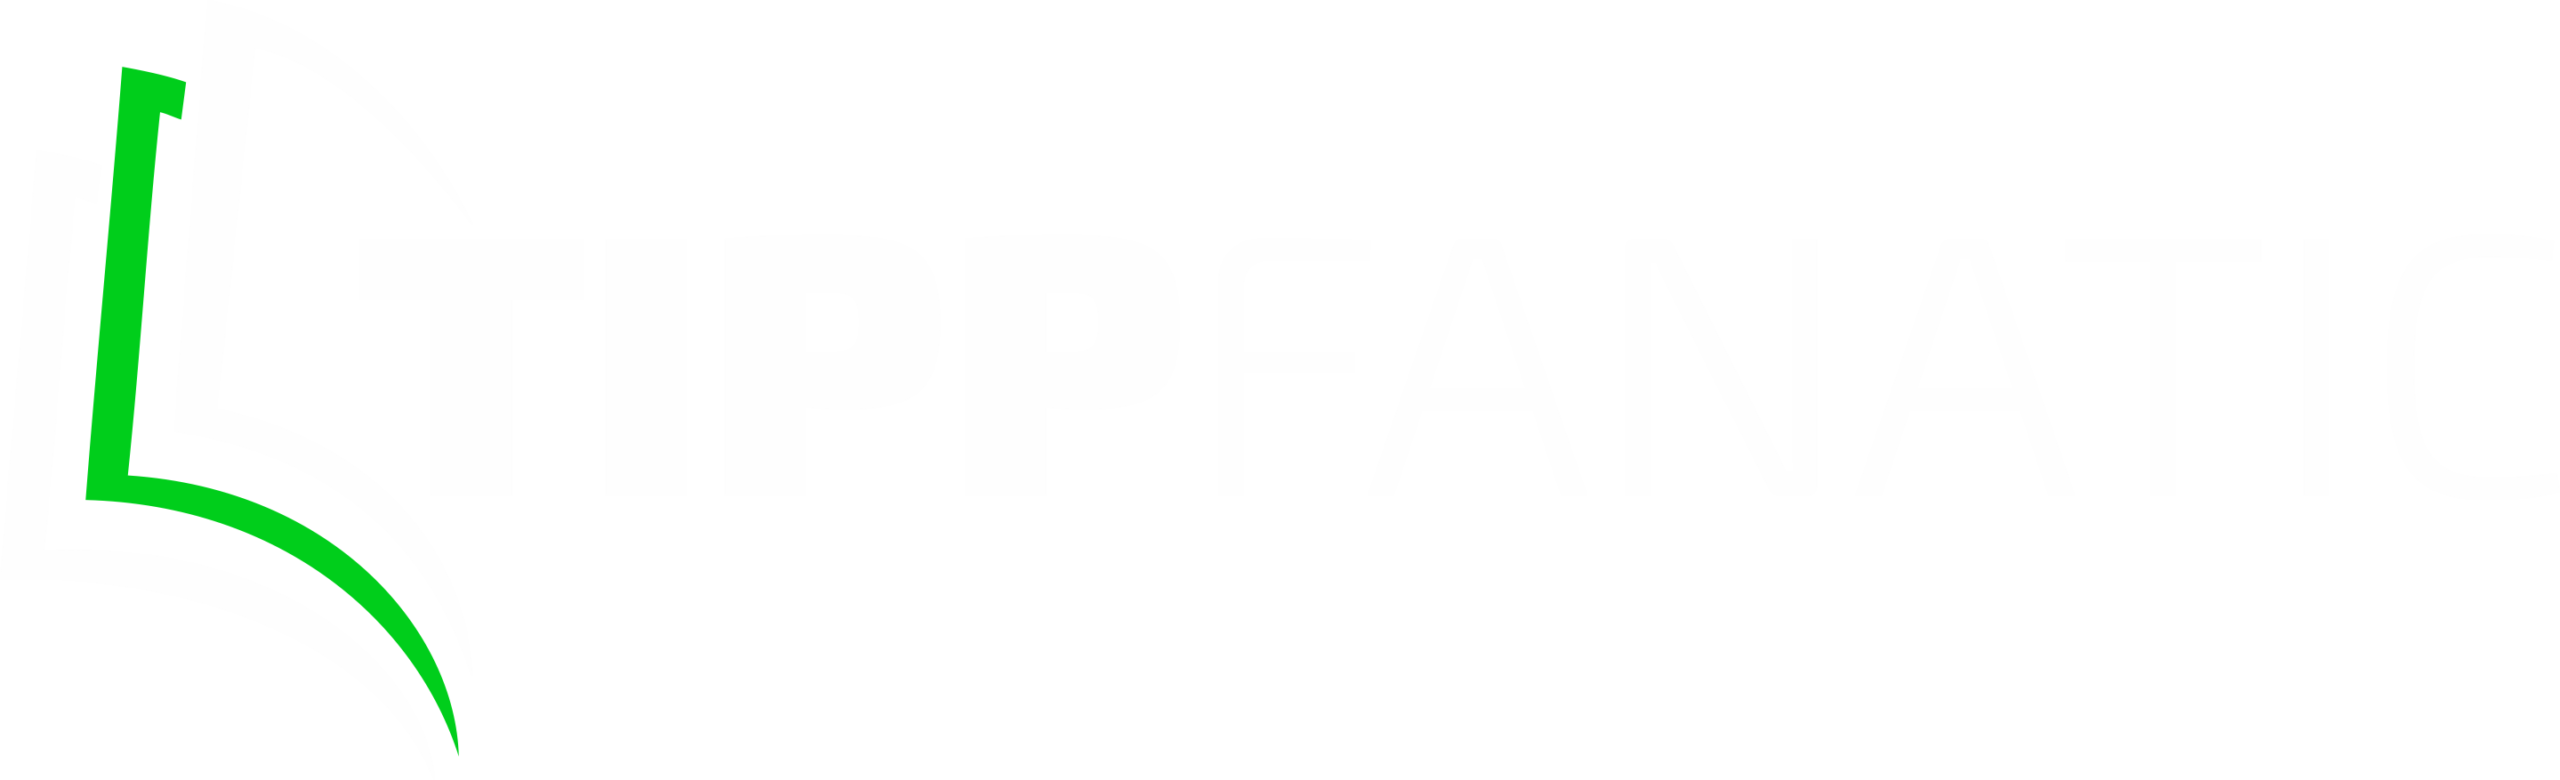 tippfanatic_logo